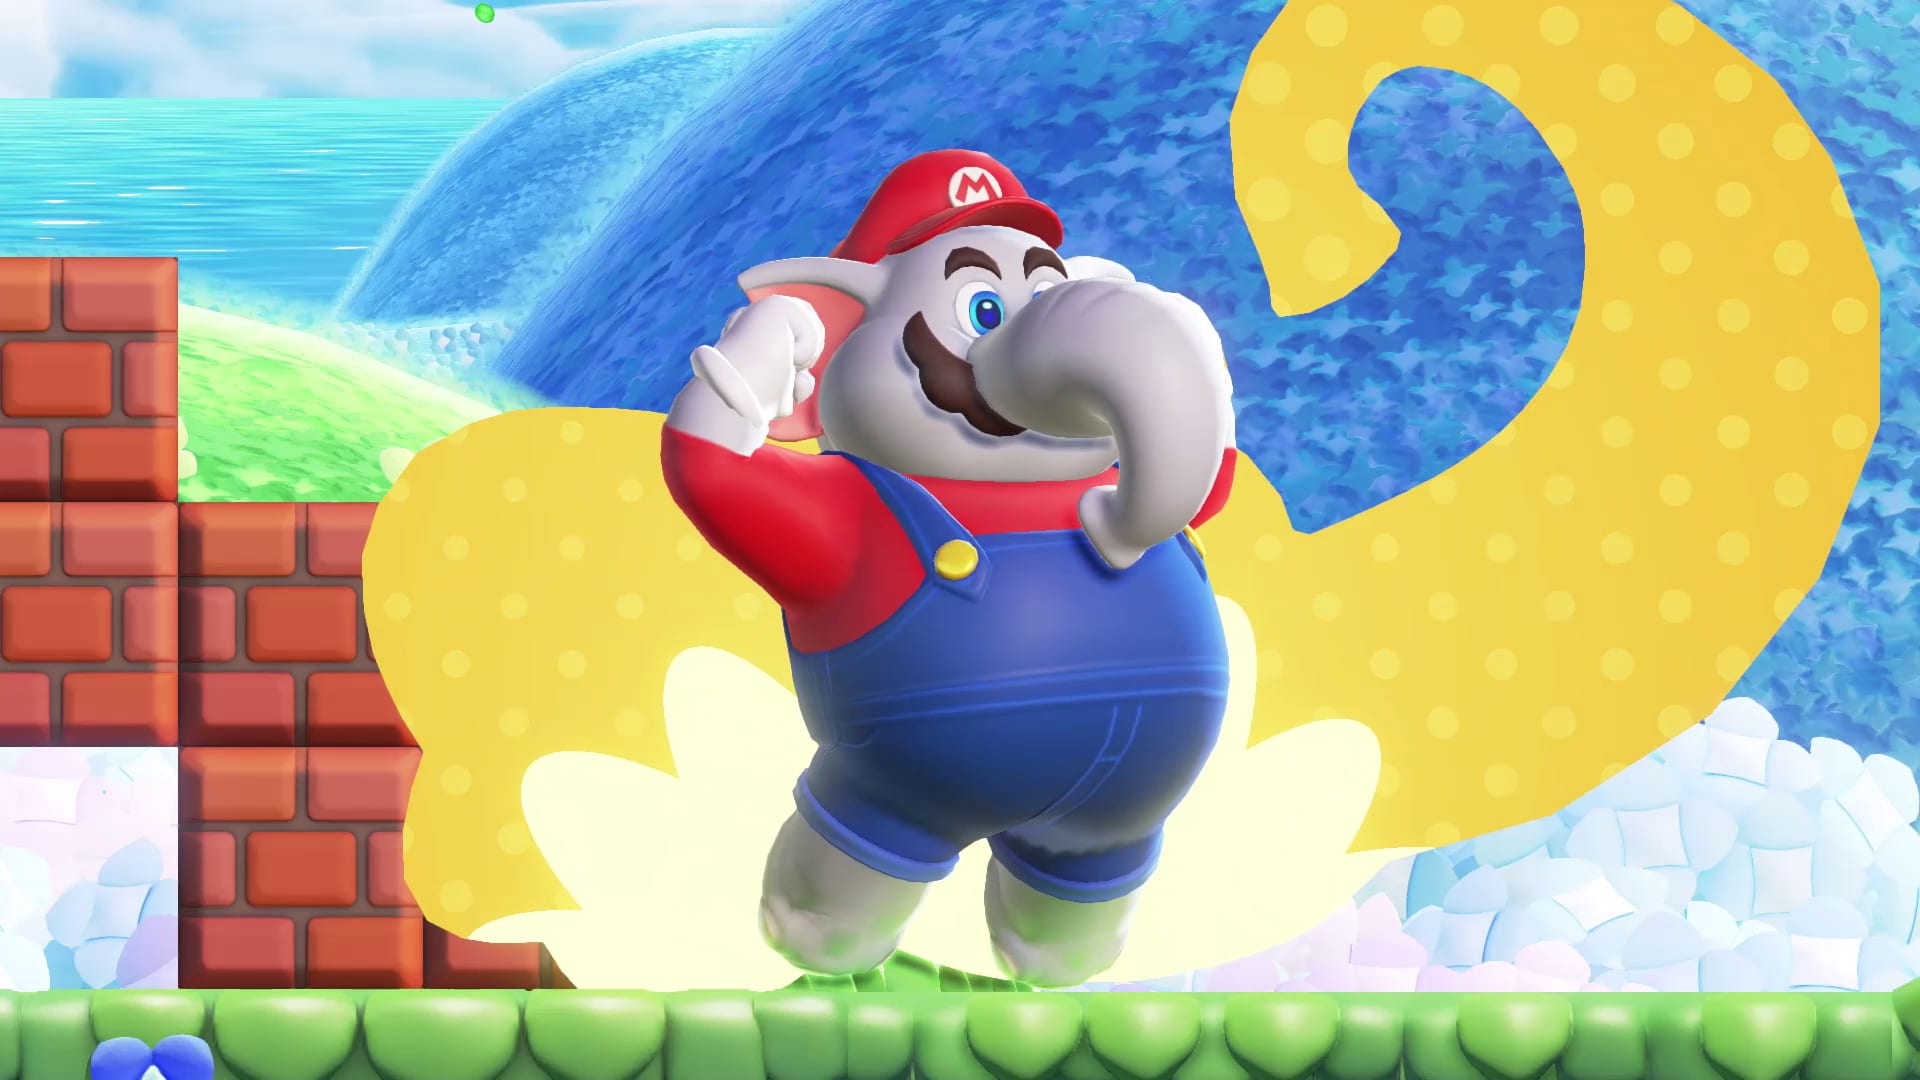 Nintendo Super Mario Bros Wonder (Switch) - Rei dos Coins